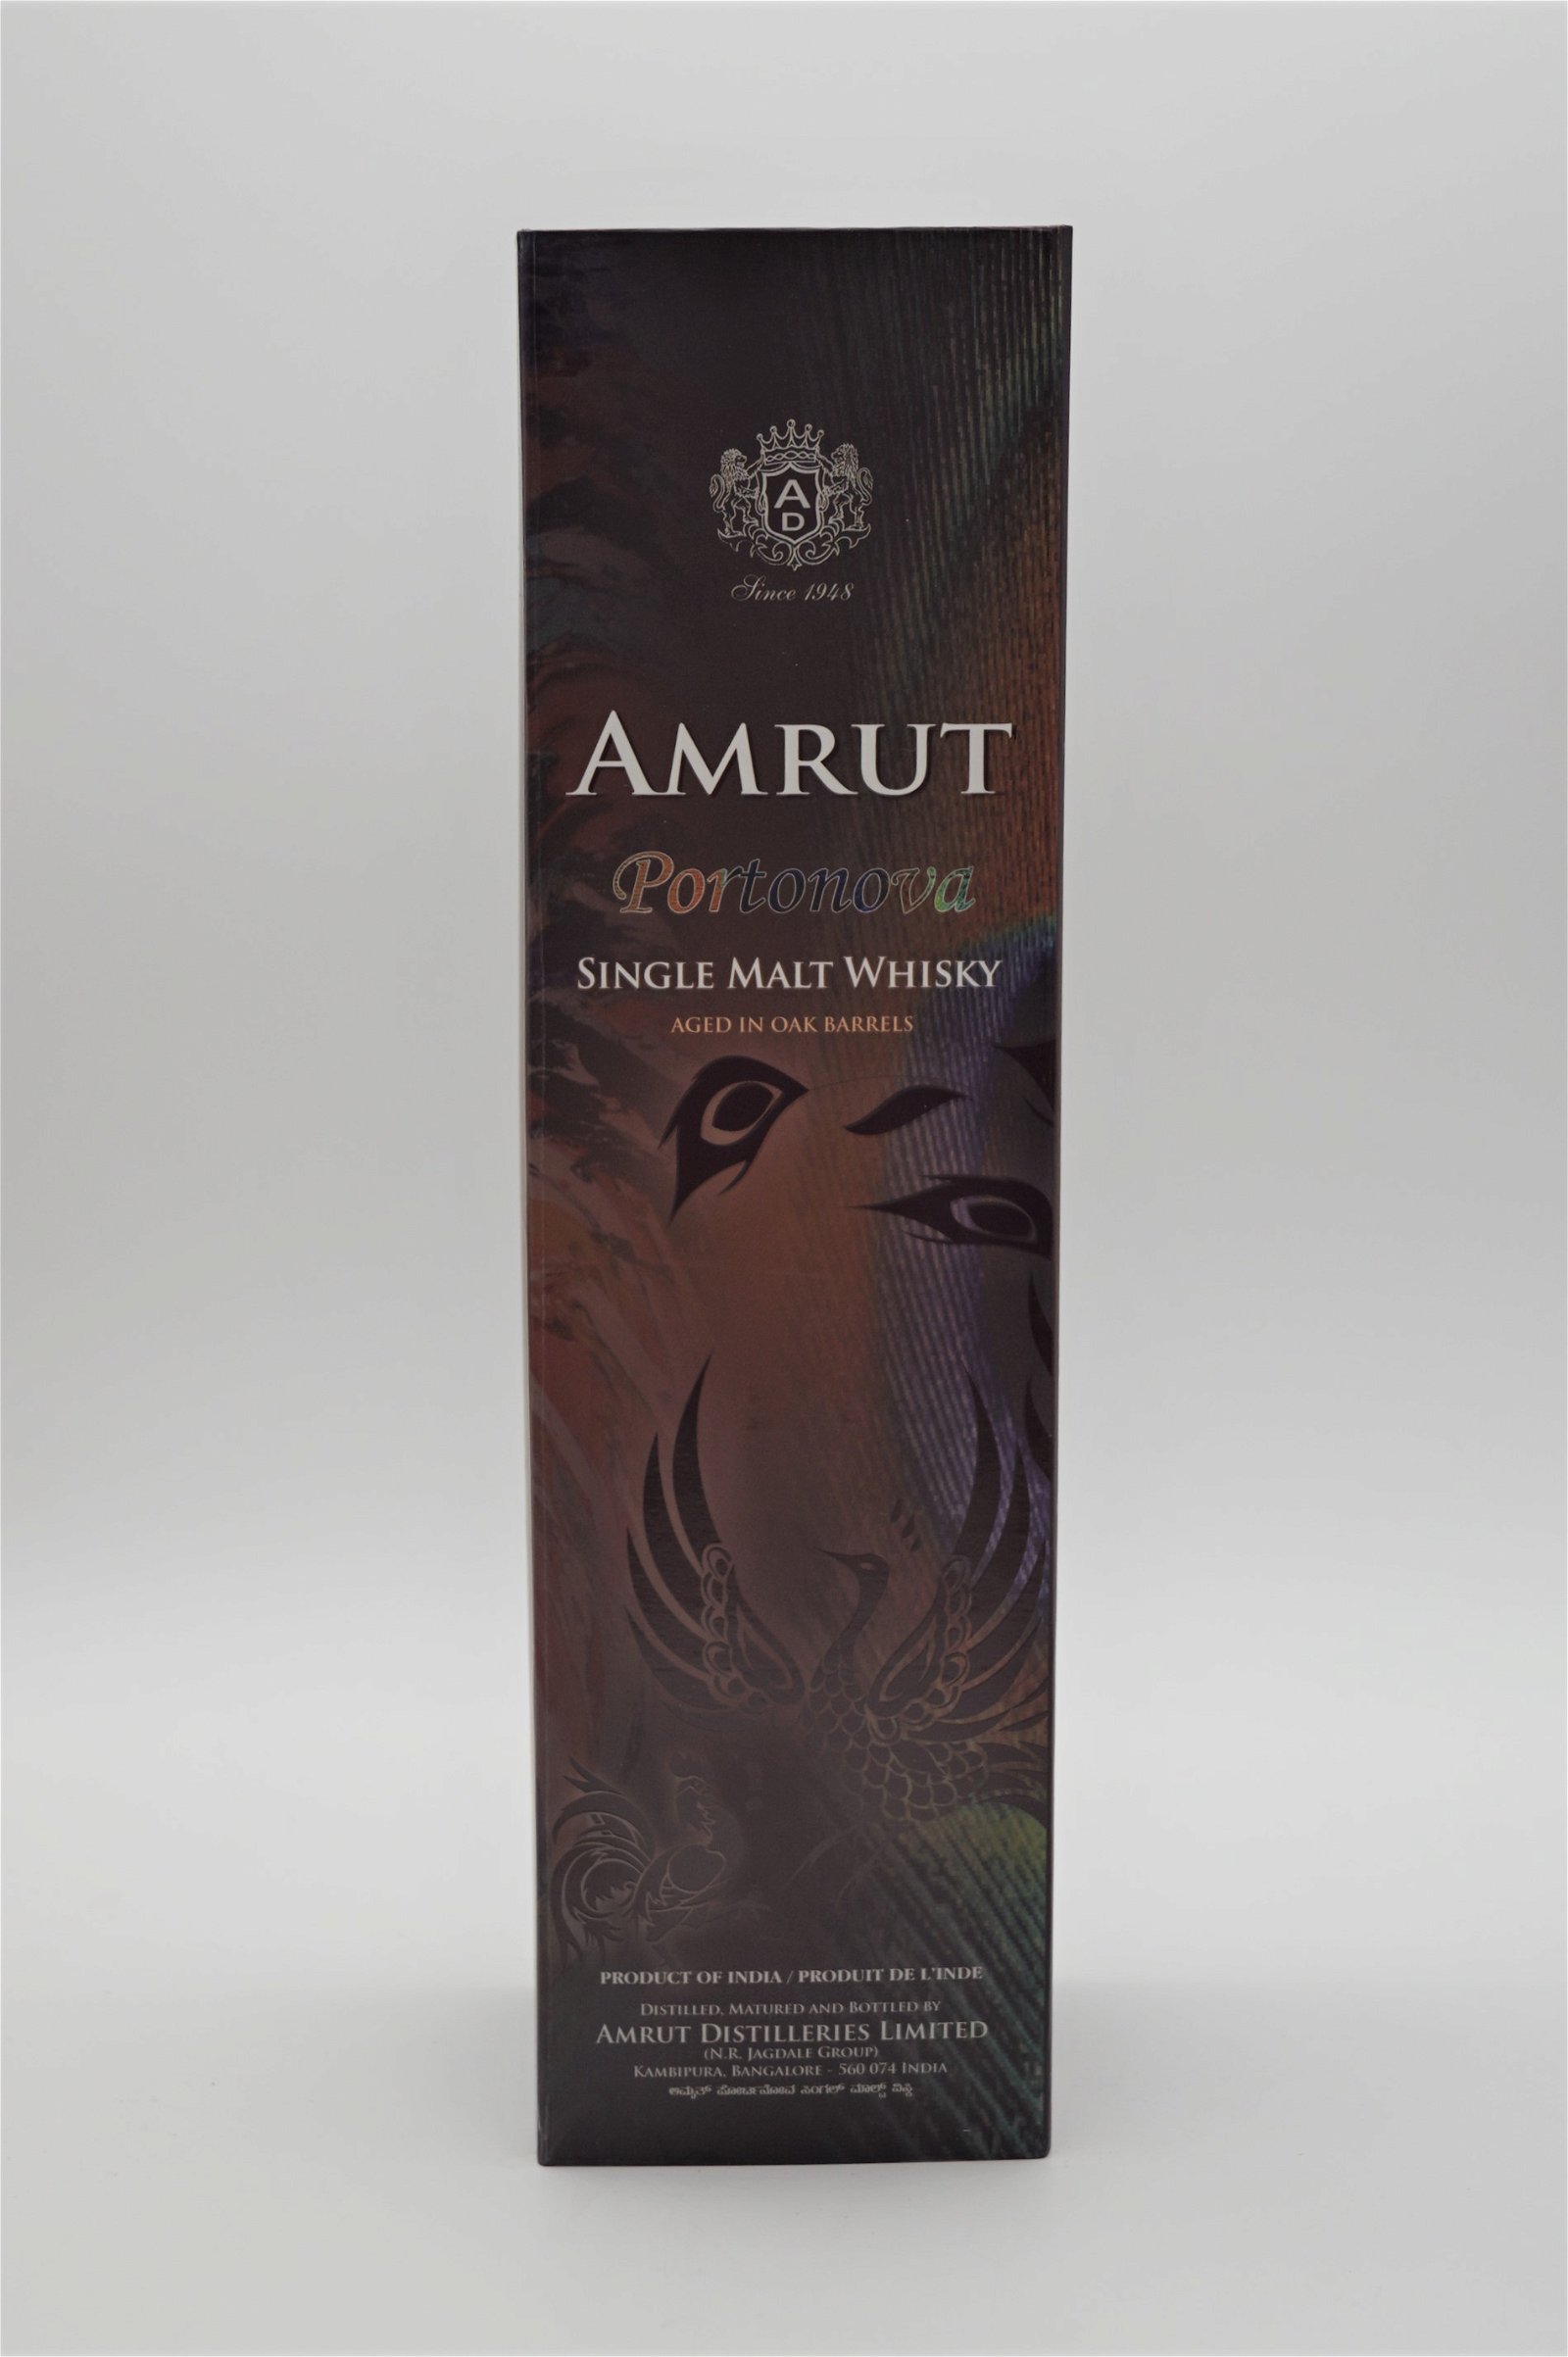 Amrut Portonova Single Malt Whisky